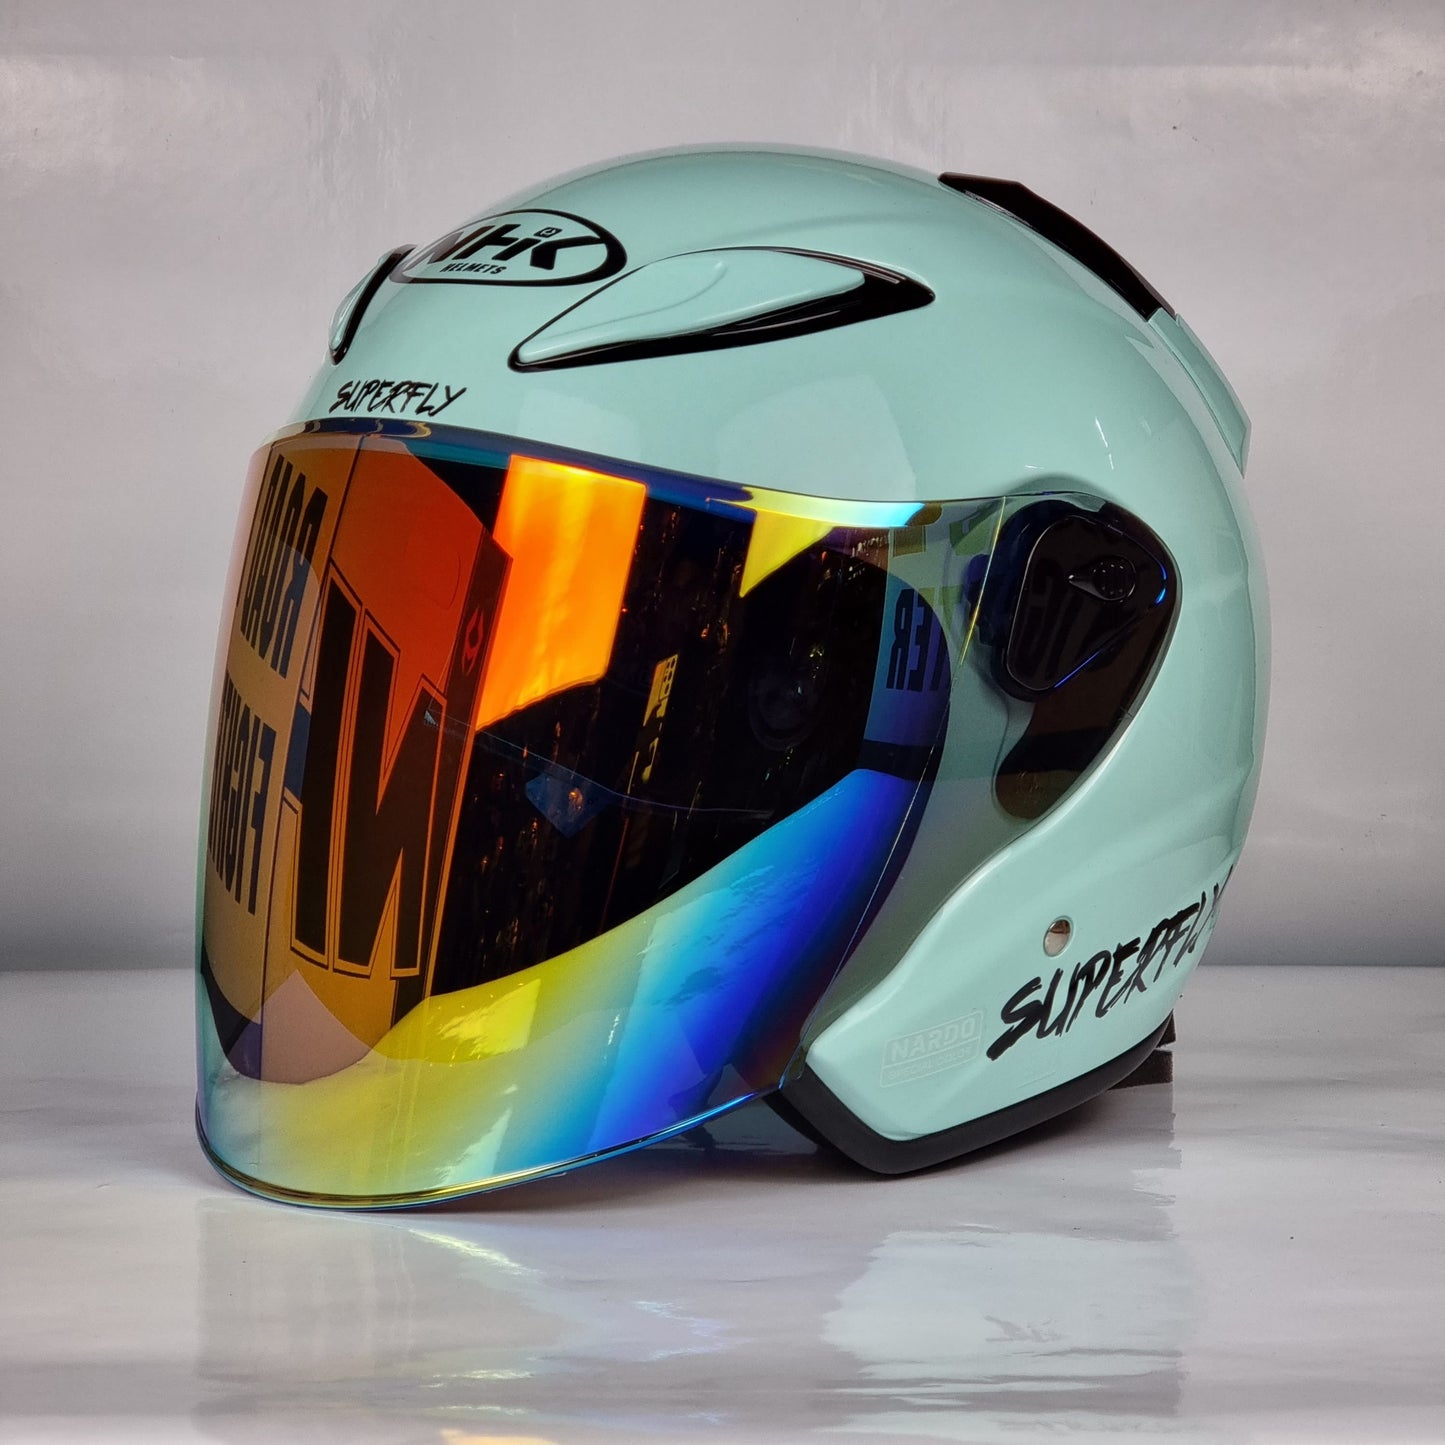 NHK Helmet X SUPERFLY R6 v2 Solid (Nardo Green Glossy)